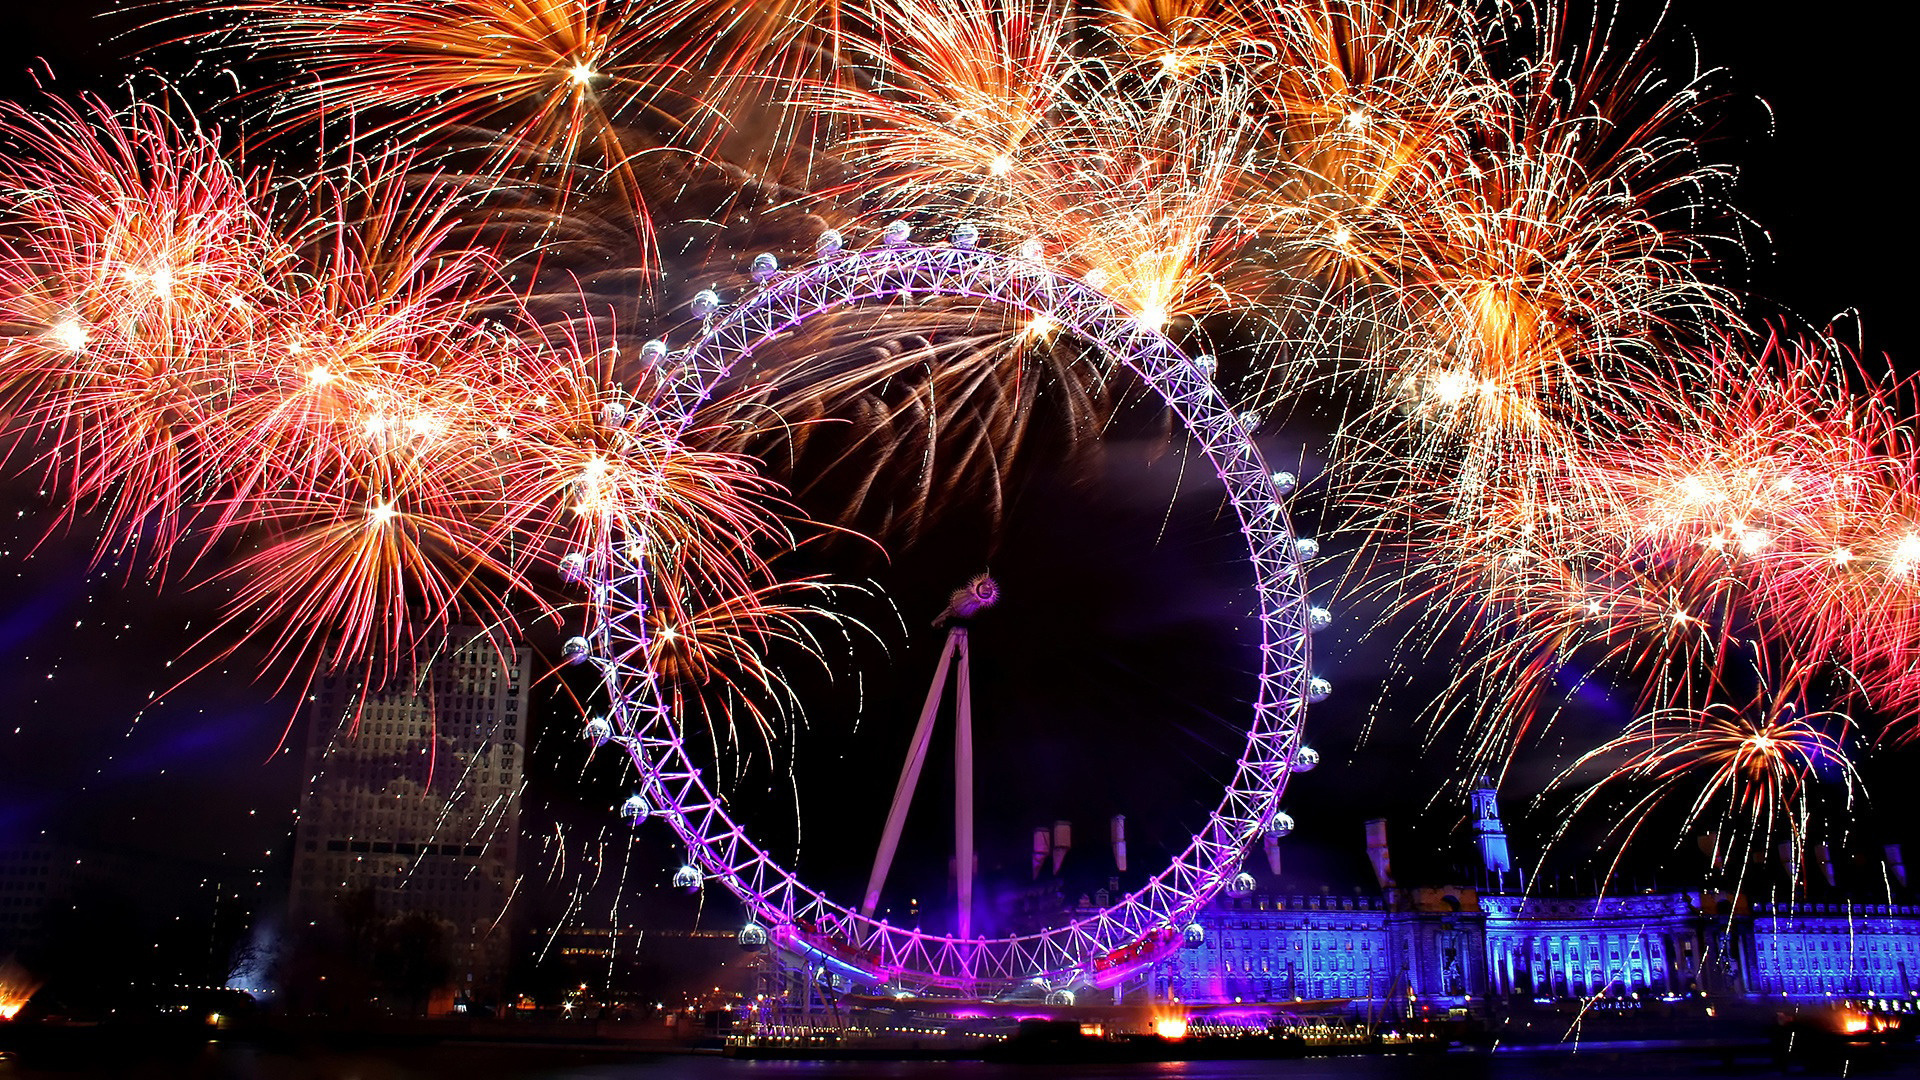 London Eye, Fireworks display, New Year's celebration, Nighttime spectacle, 1920x1080 Full HD Desktop